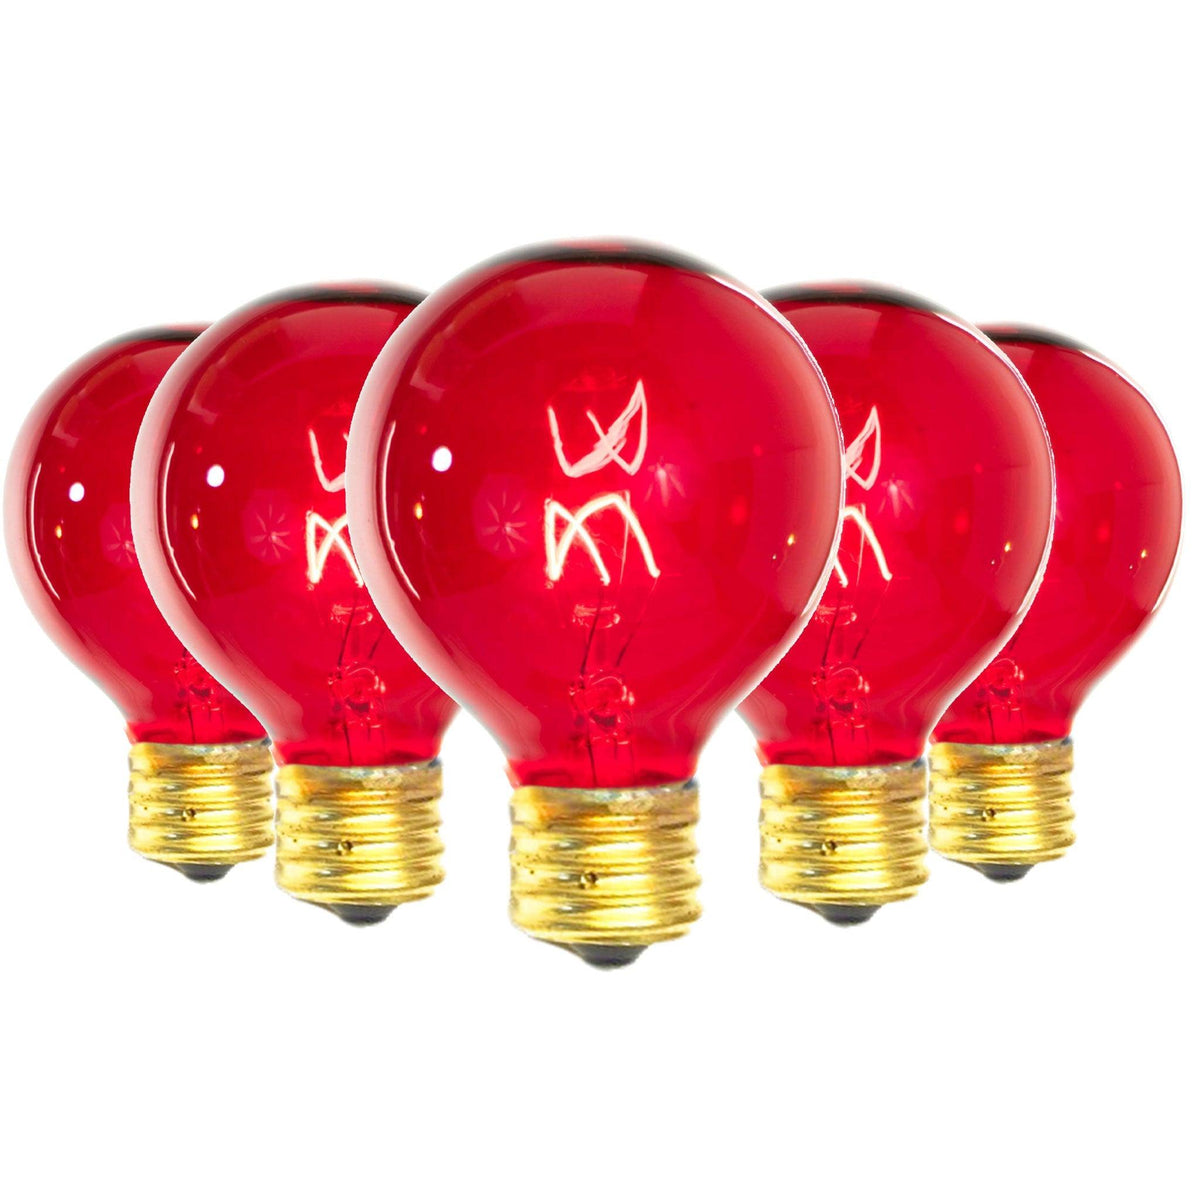 Lee Display's Box of 25 of brand new transparent Red G50 Globe Light Bulbs on sale now at leedisplay.com